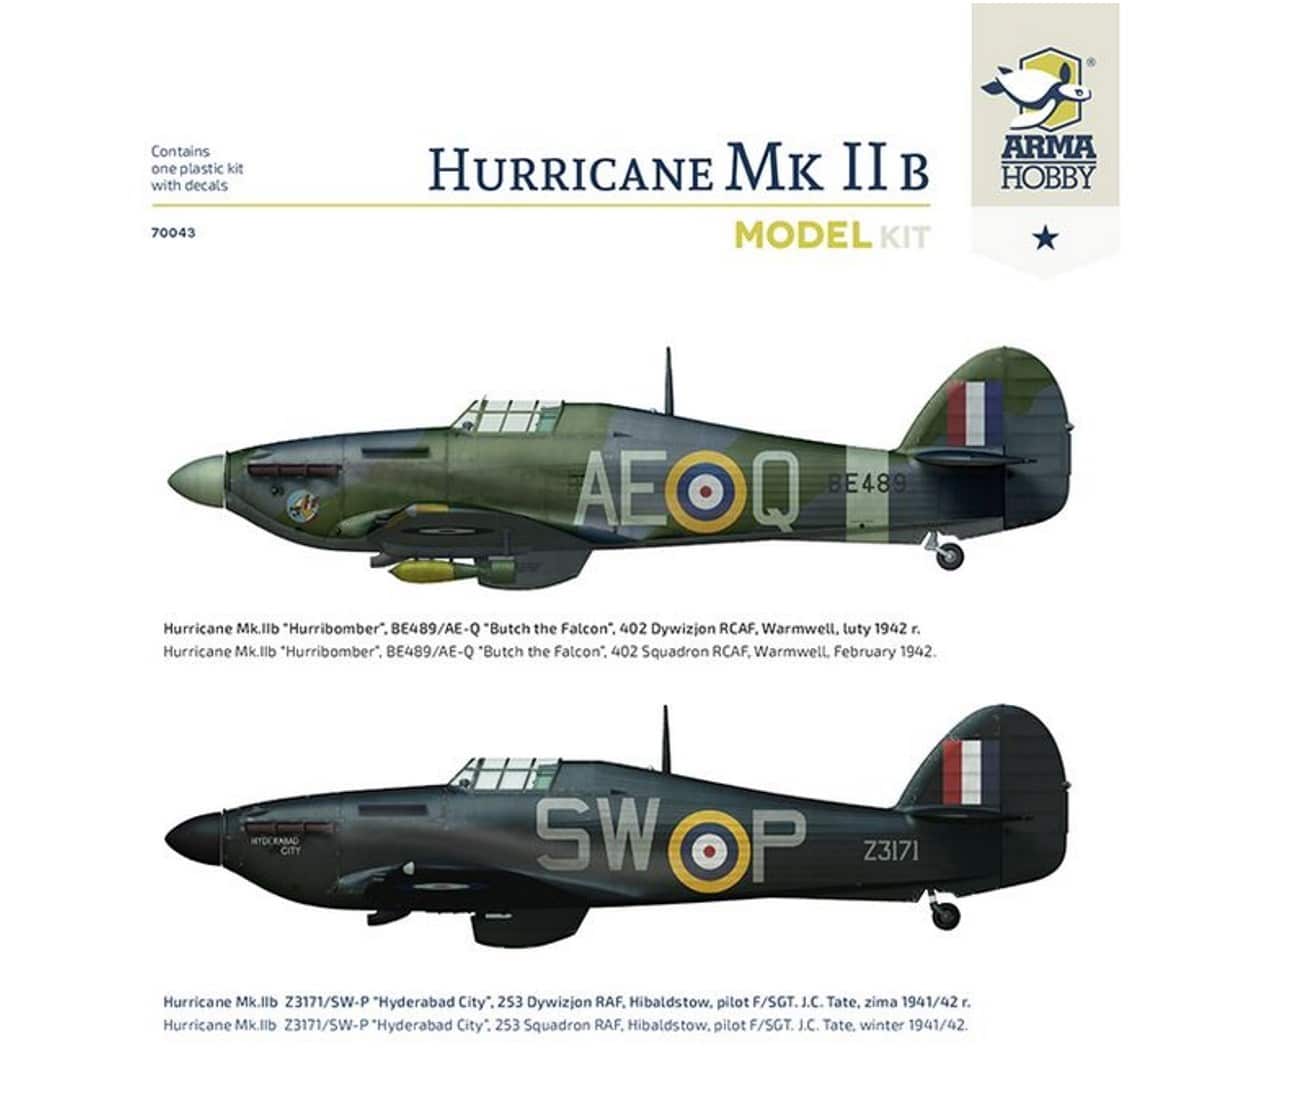 Arma Hobby Hurricanes MK II B Painting and Marking